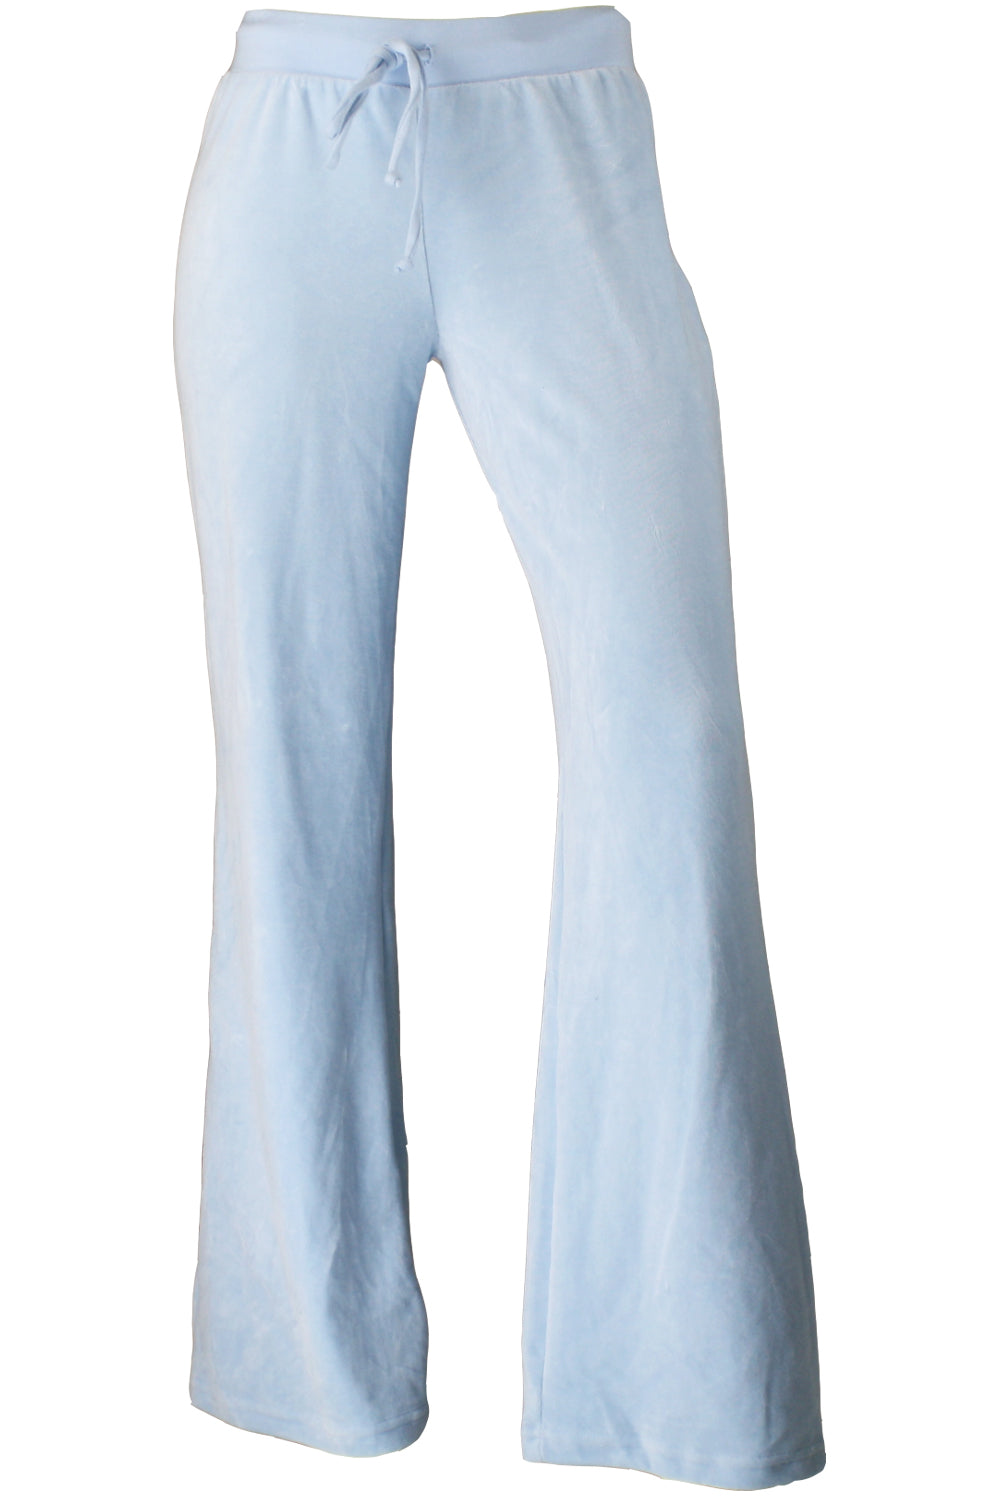 Buy Blue Trousers & Pants for Women by Sateen Online | Ajio.com